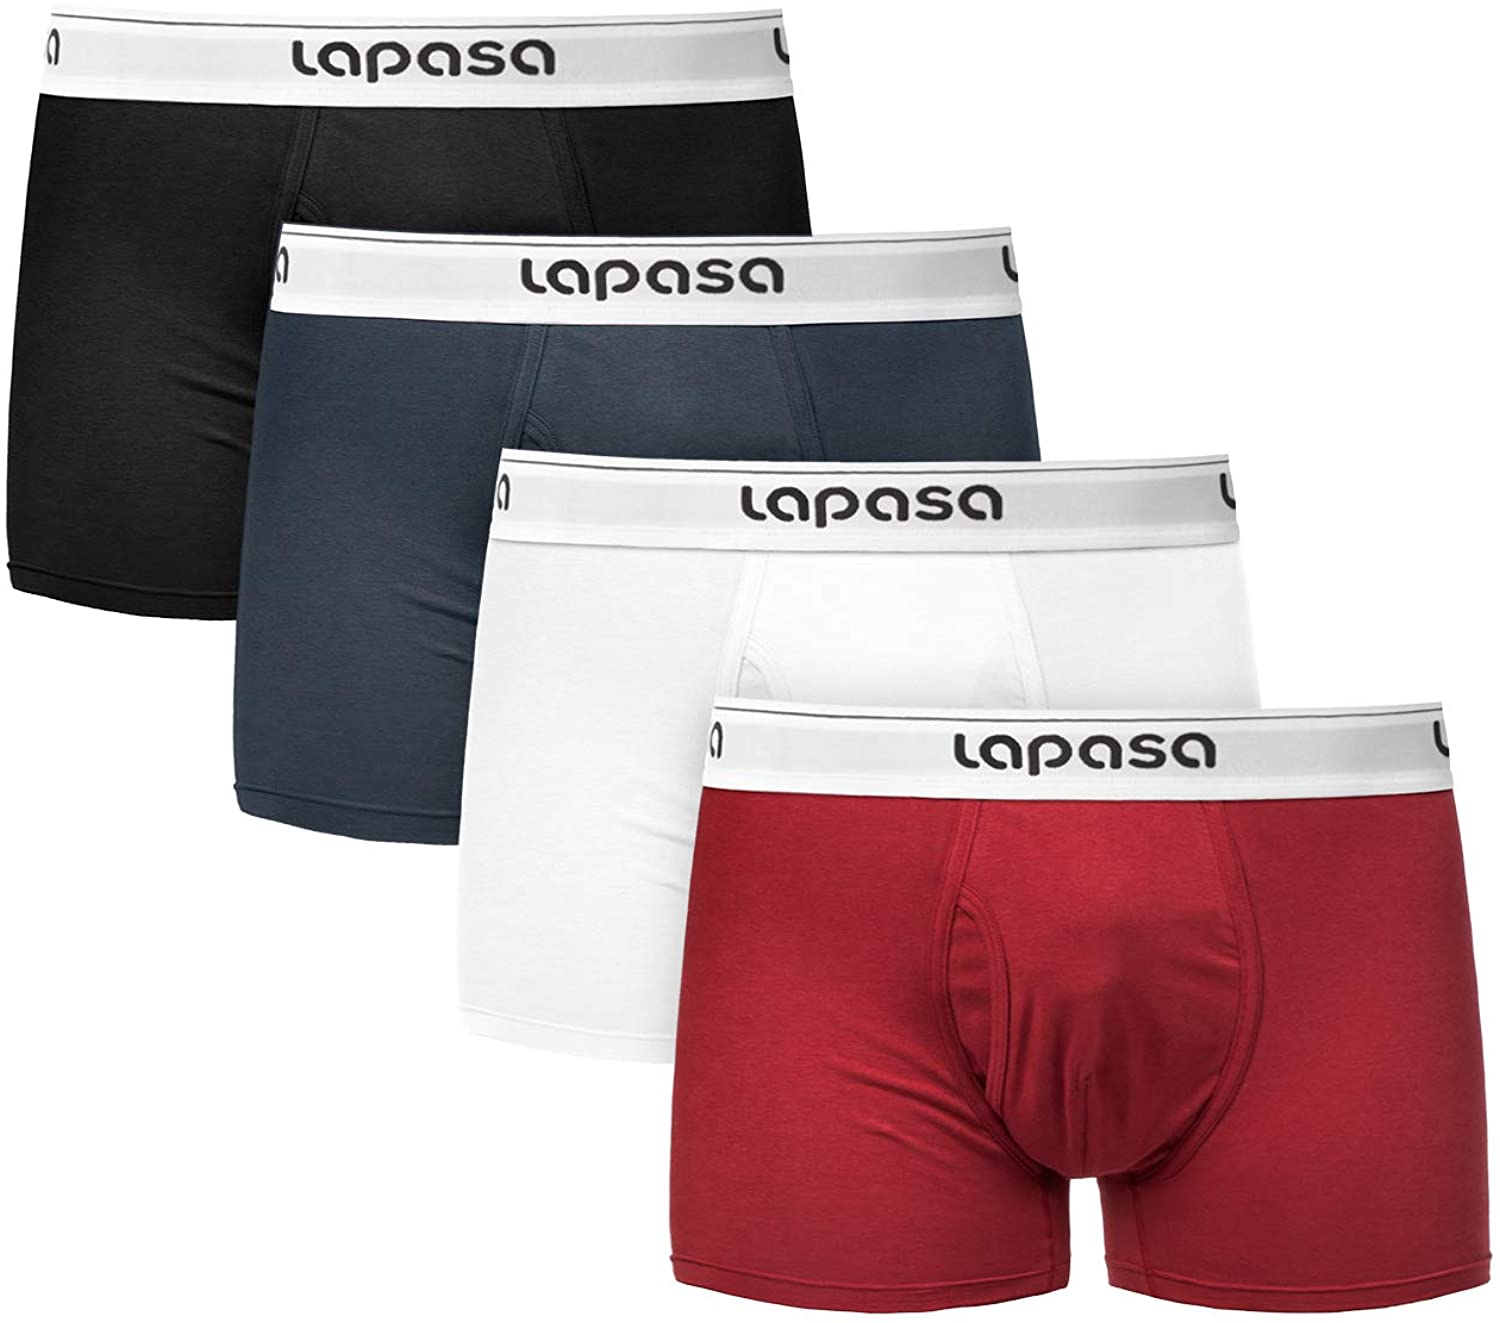 LAPASA Men's Boxer Briefs 4-Pack Cotton Stretch Underwear with Fly Short Leg Comfort Soft M03